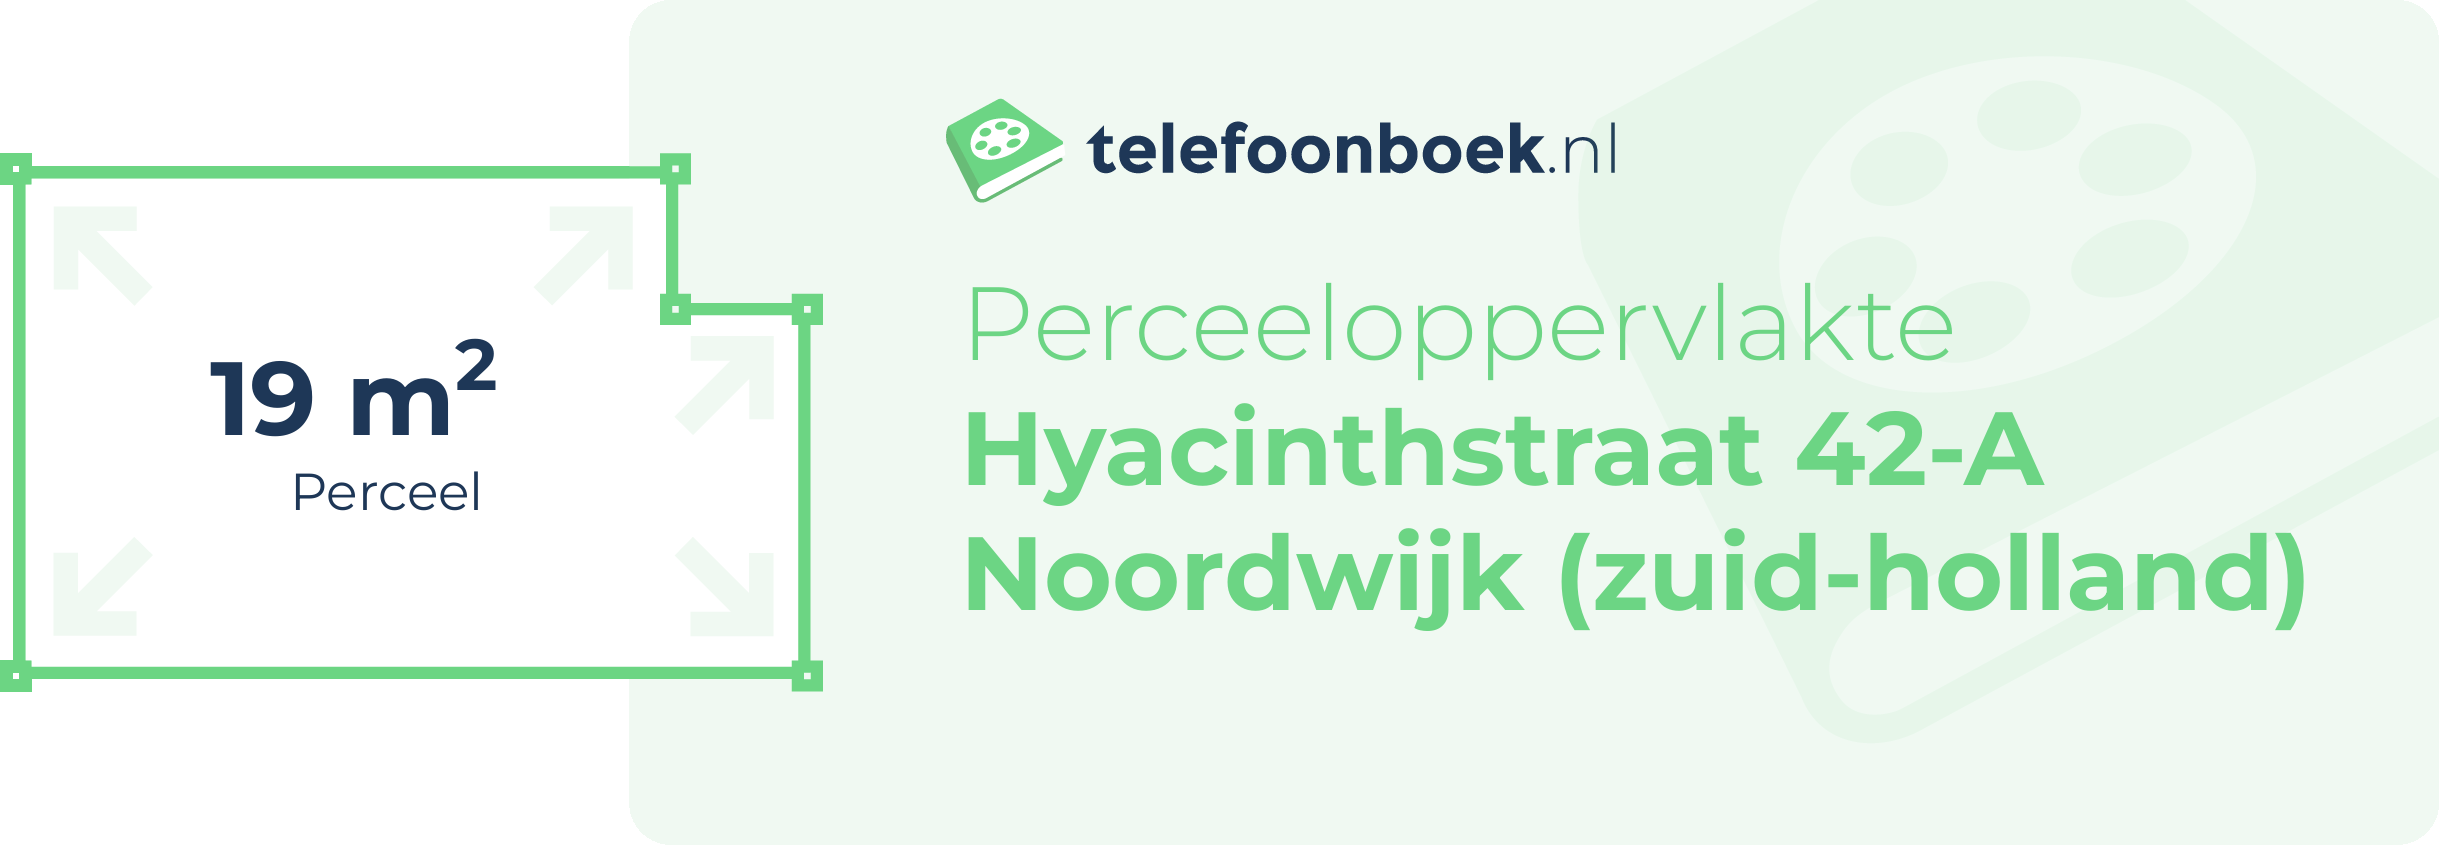 Perceeloppervlakte Hyacinthstraat 42-A Noordwijk (Zuid-Holland)